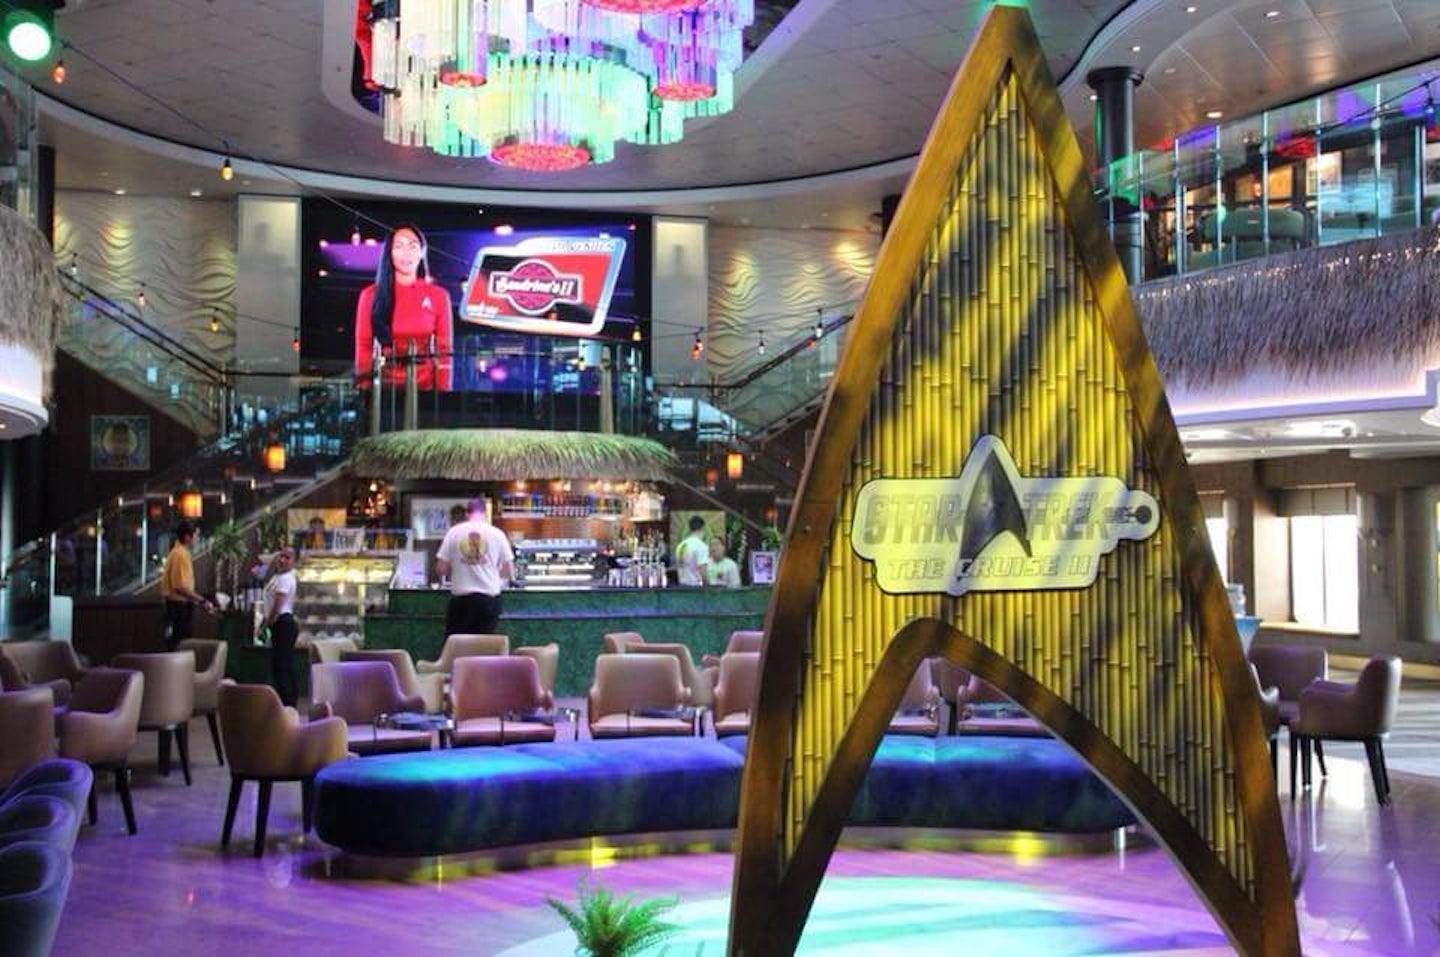 NCL Norwegian Jade - Atrium Bar (Star Trek Shore Leave Bar theme during Sta